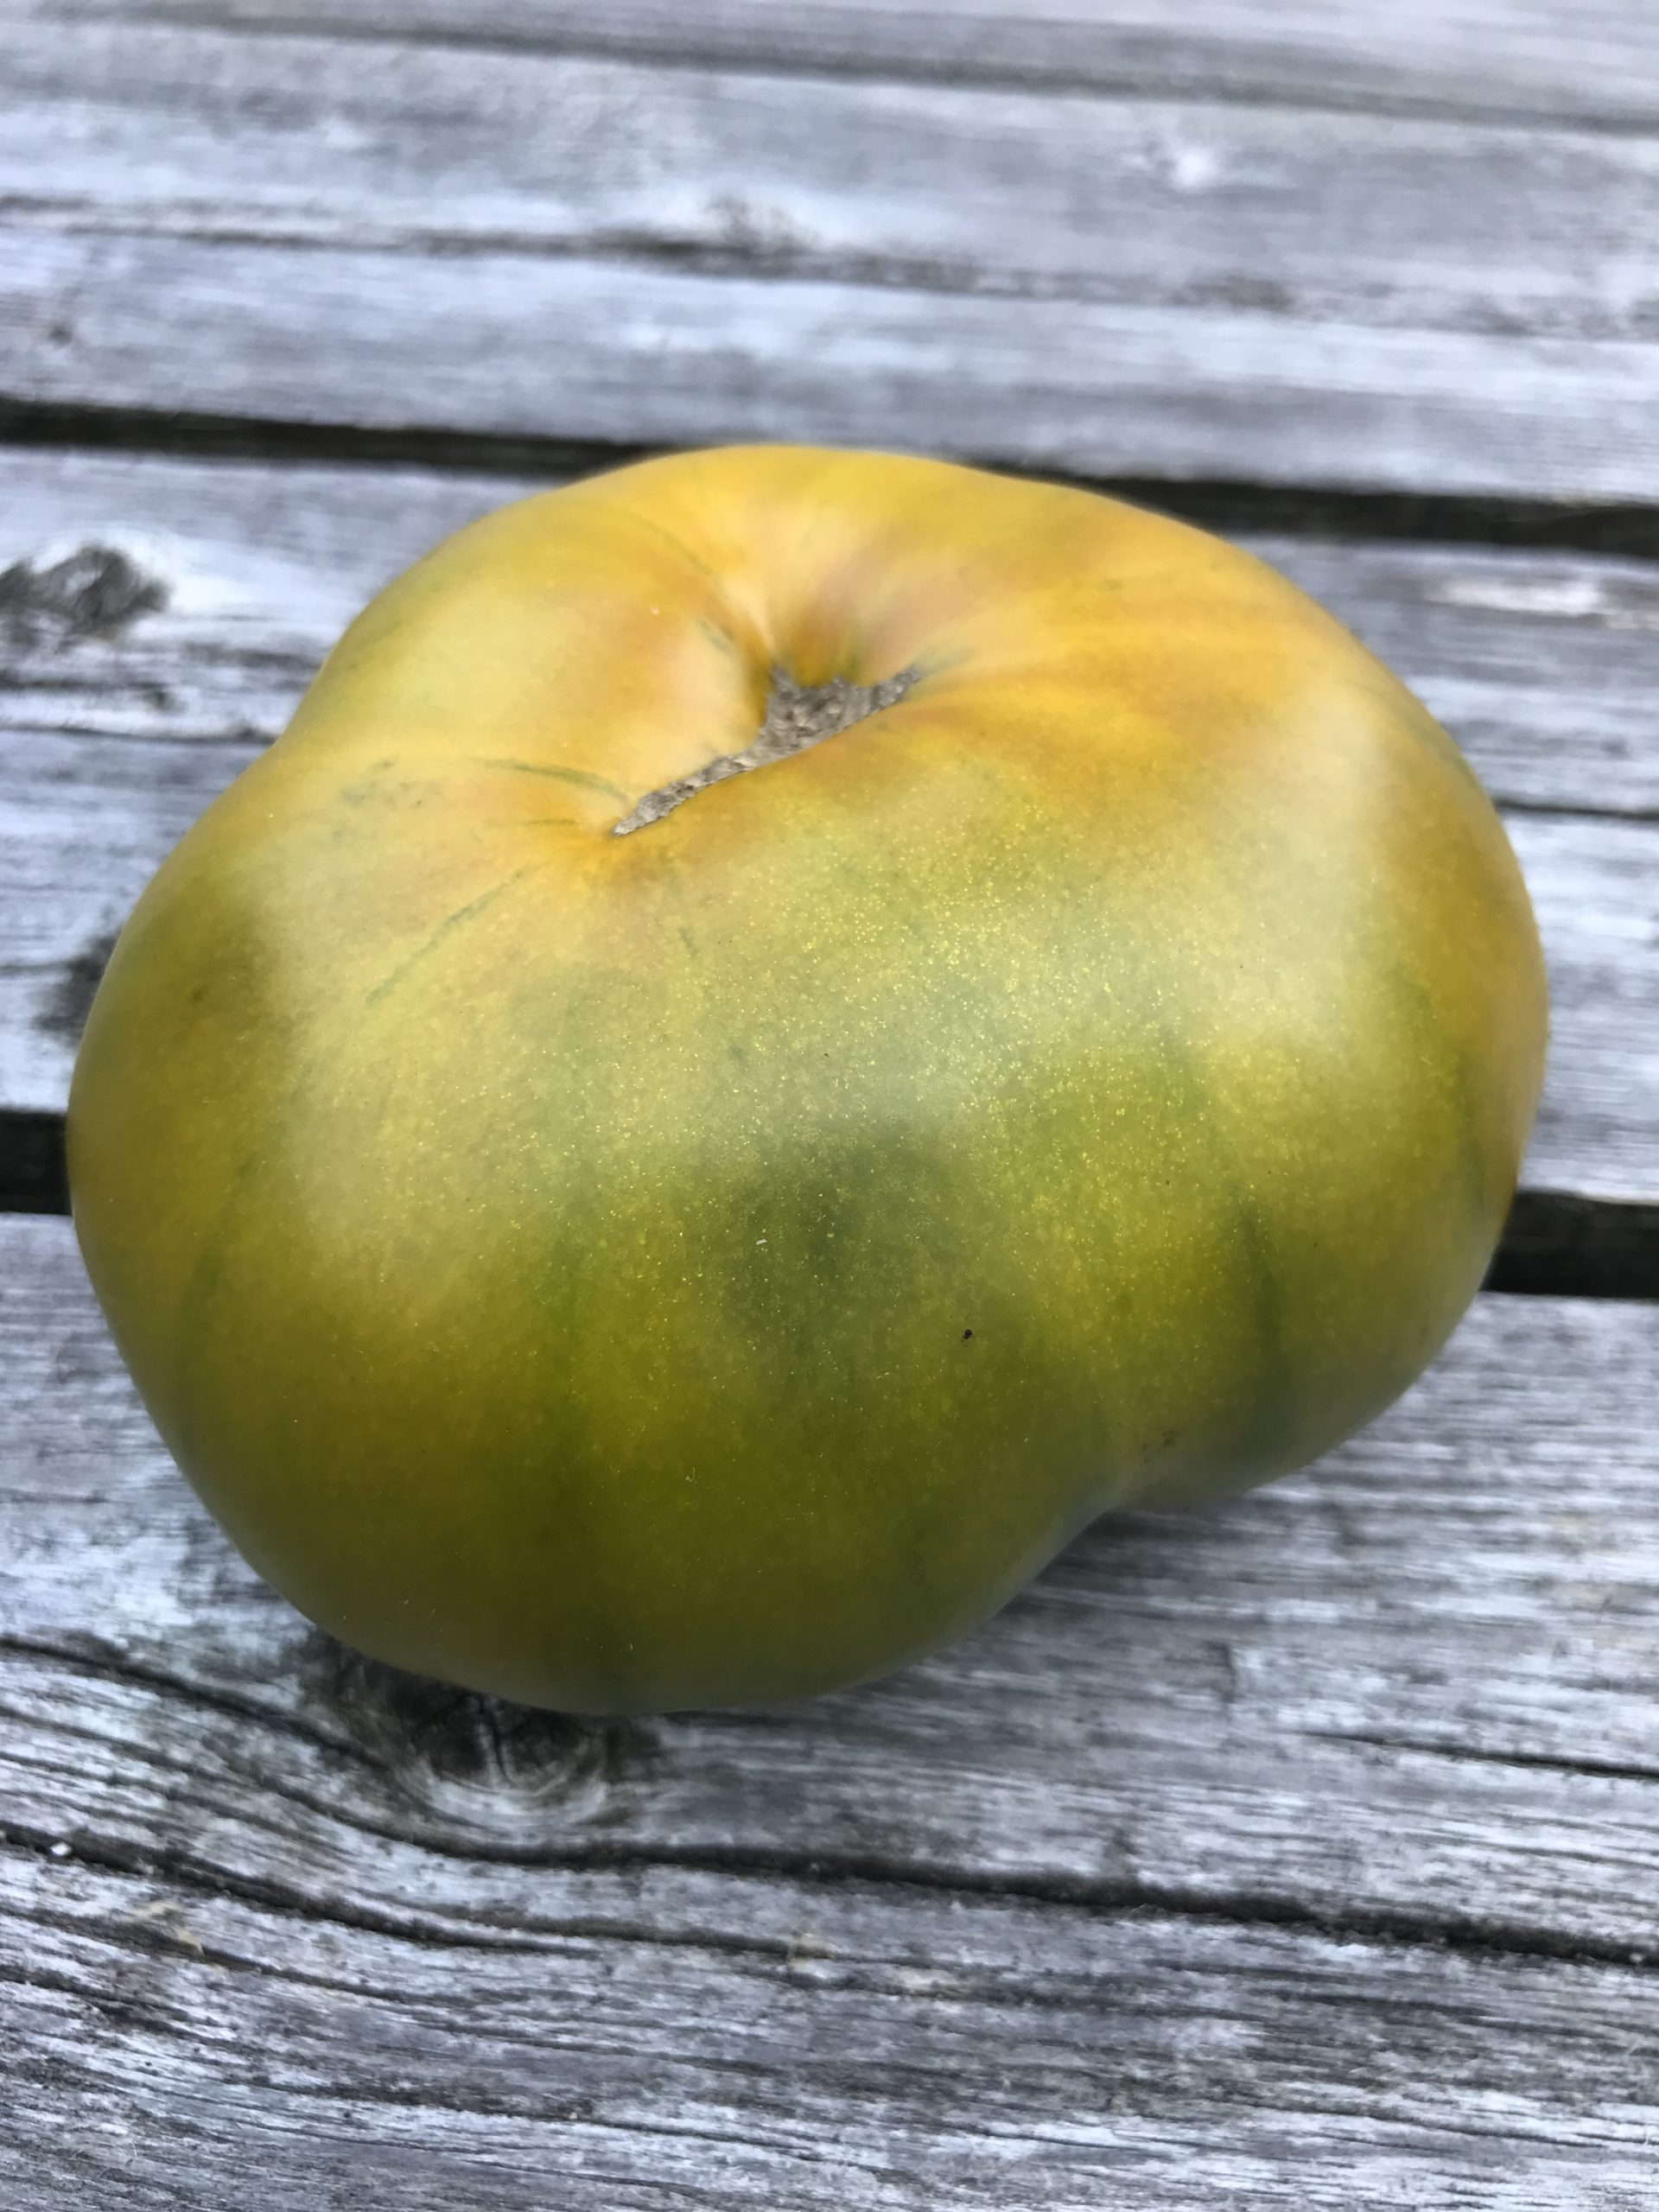 Emerald Evergreen Indeterminate Slicing Tomato Seeds